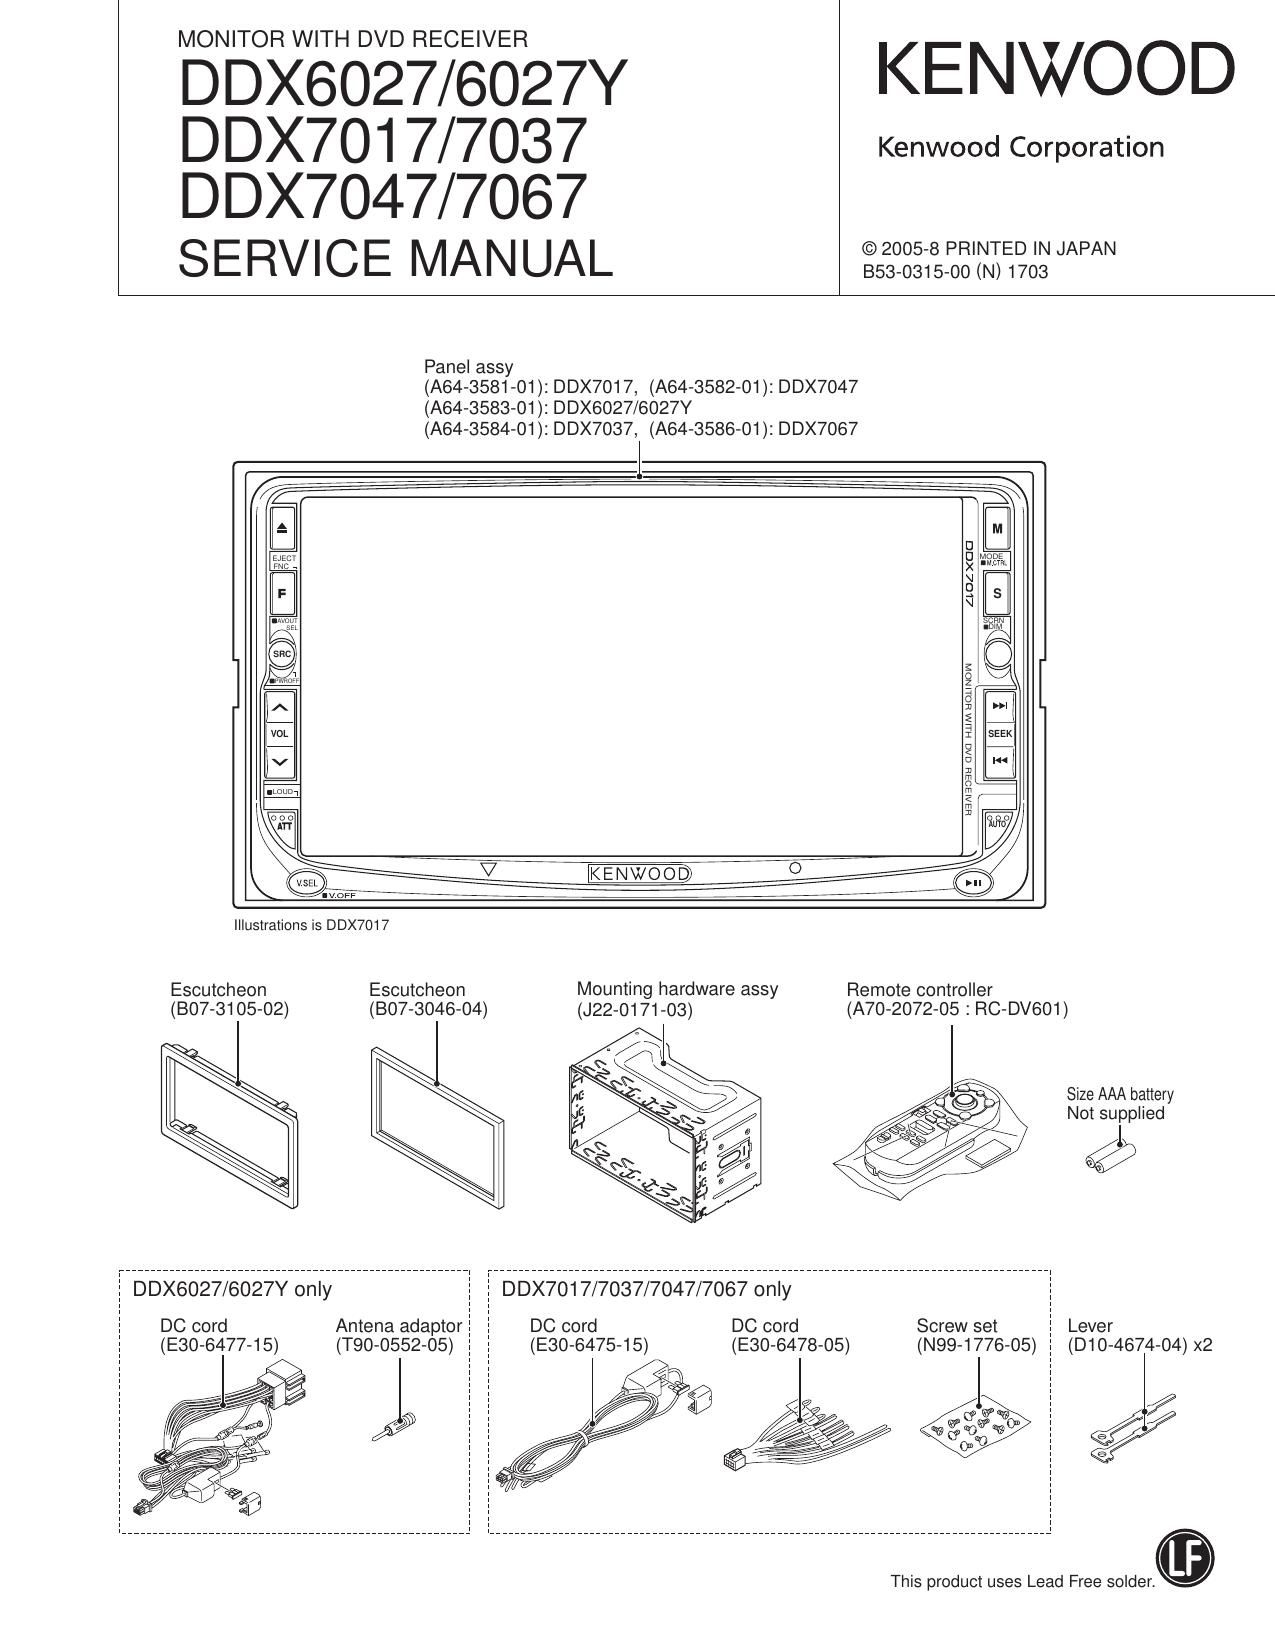 Kenwood DDX 7047 Service Manual